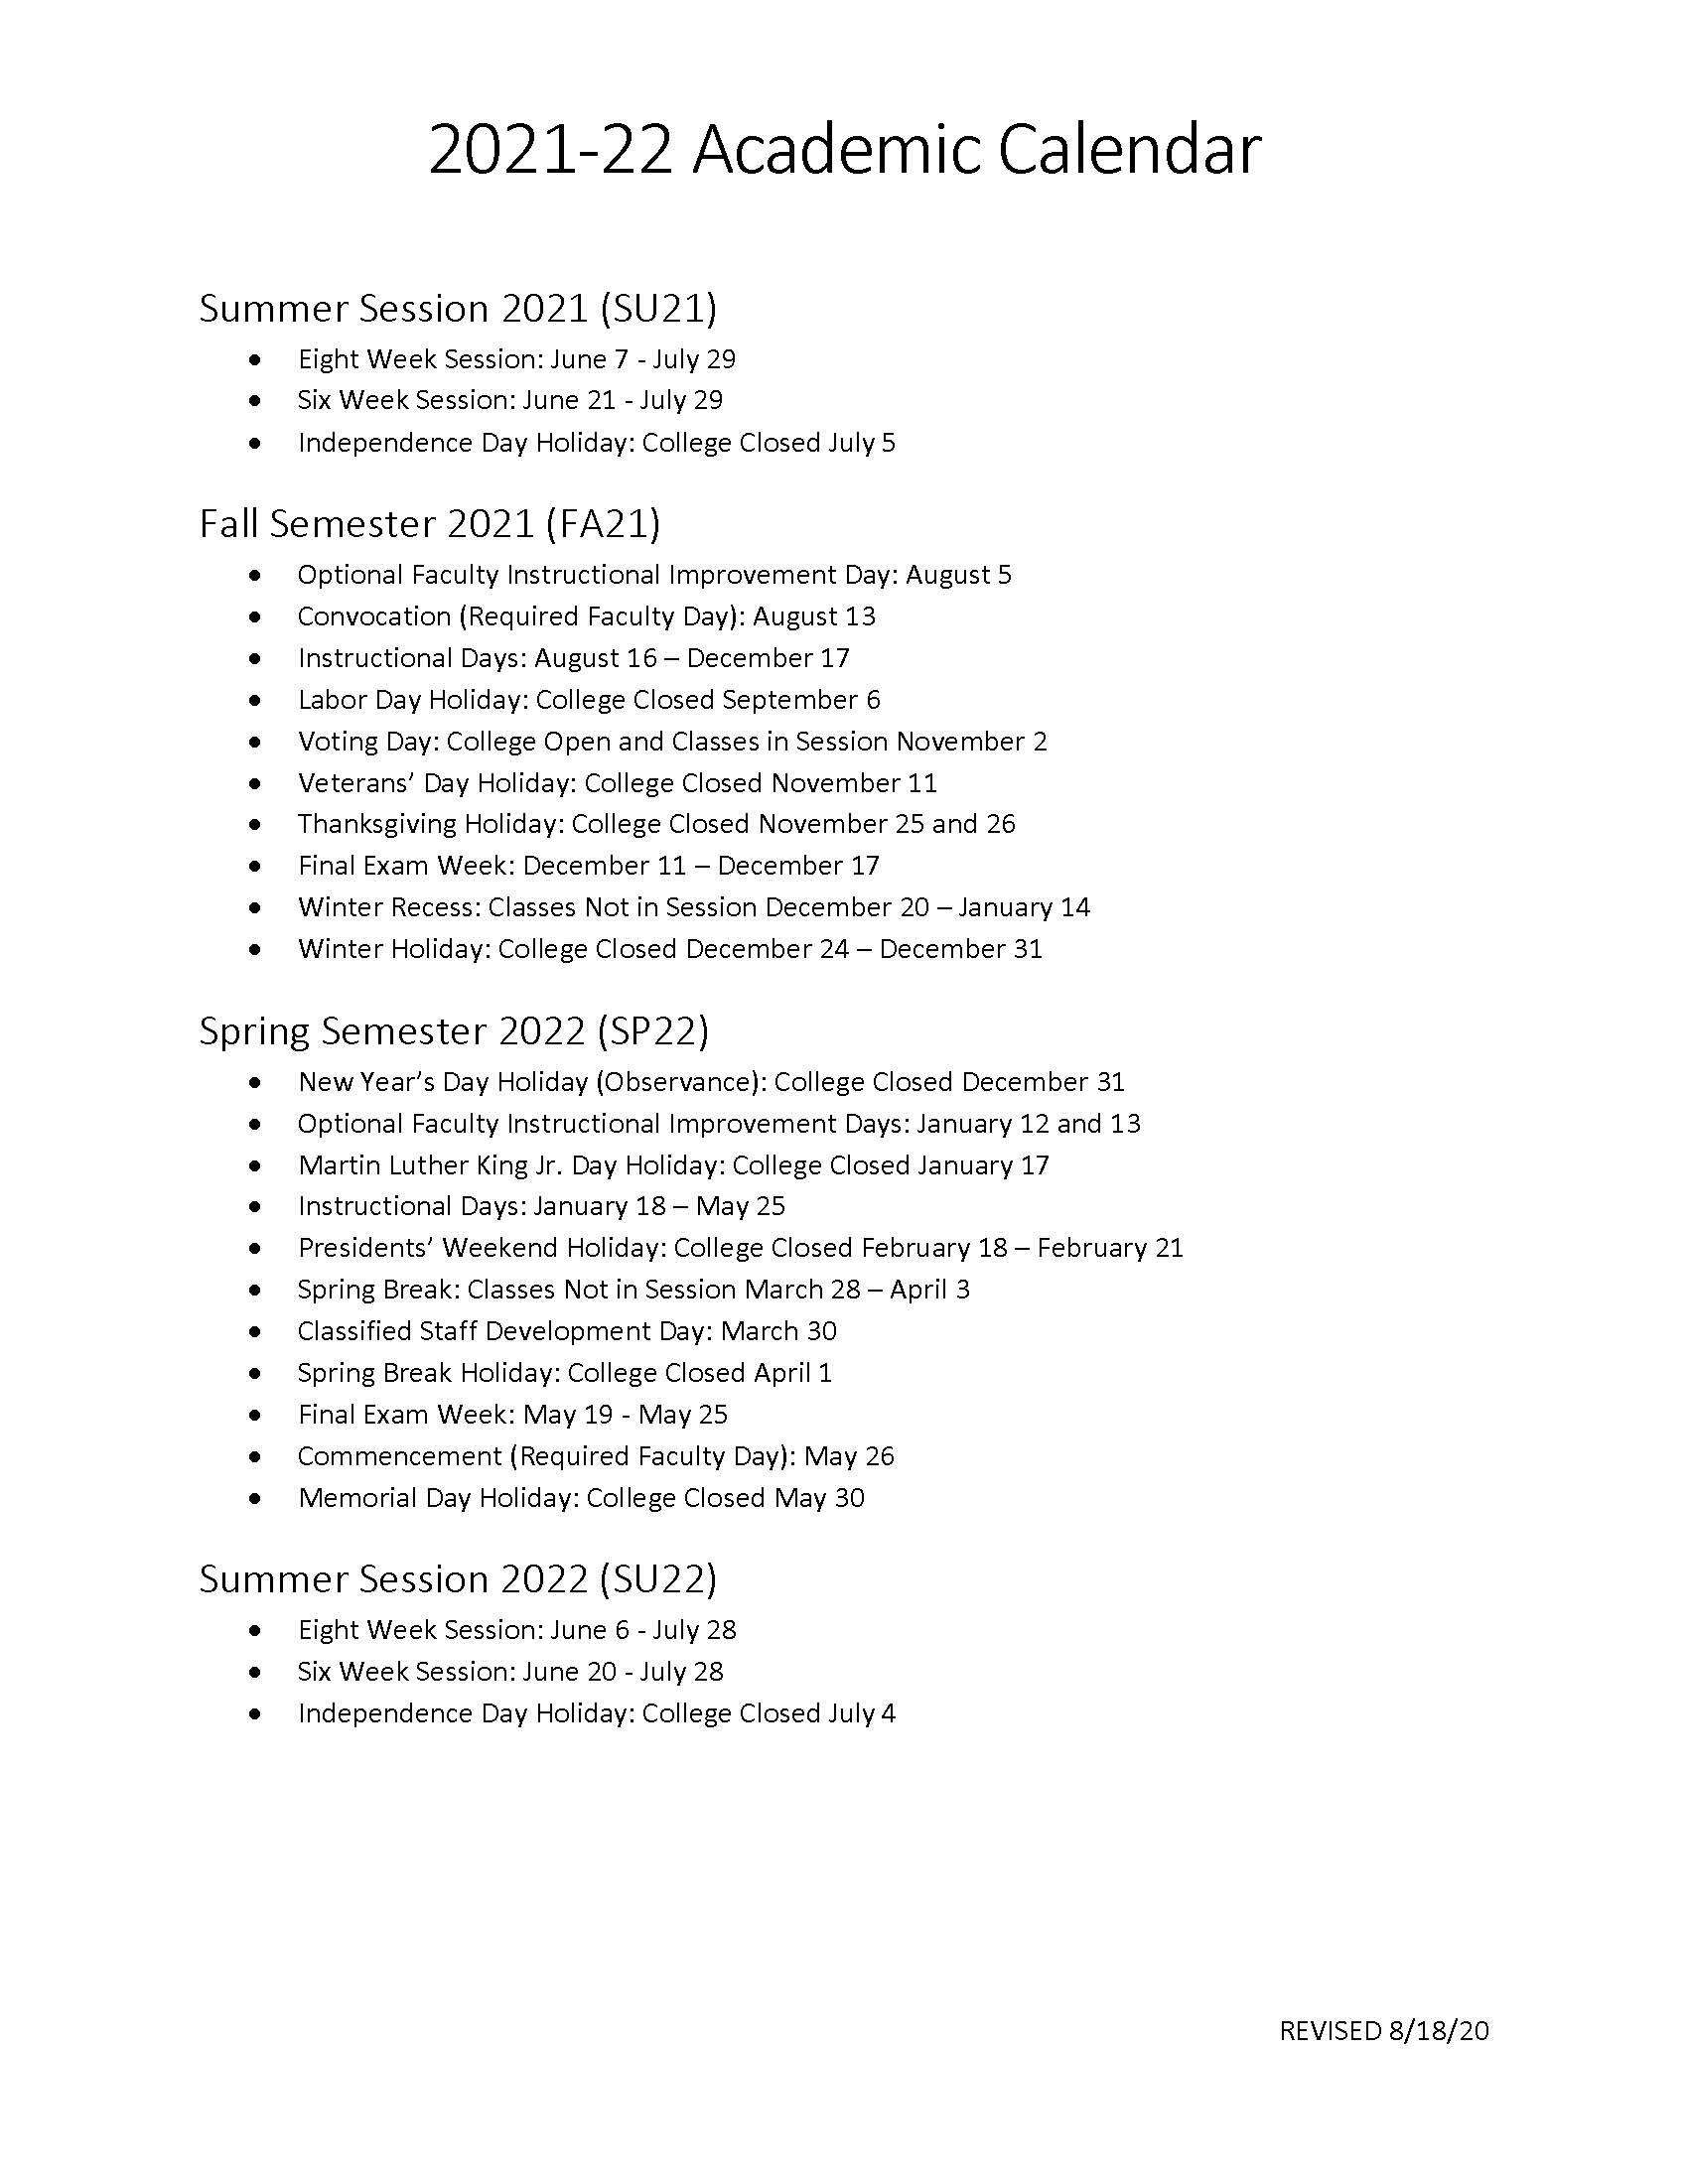 Montgomery College Academic Calendar 2022 Msjc Events - 2021-2022 Academic Calendar Is Now Available